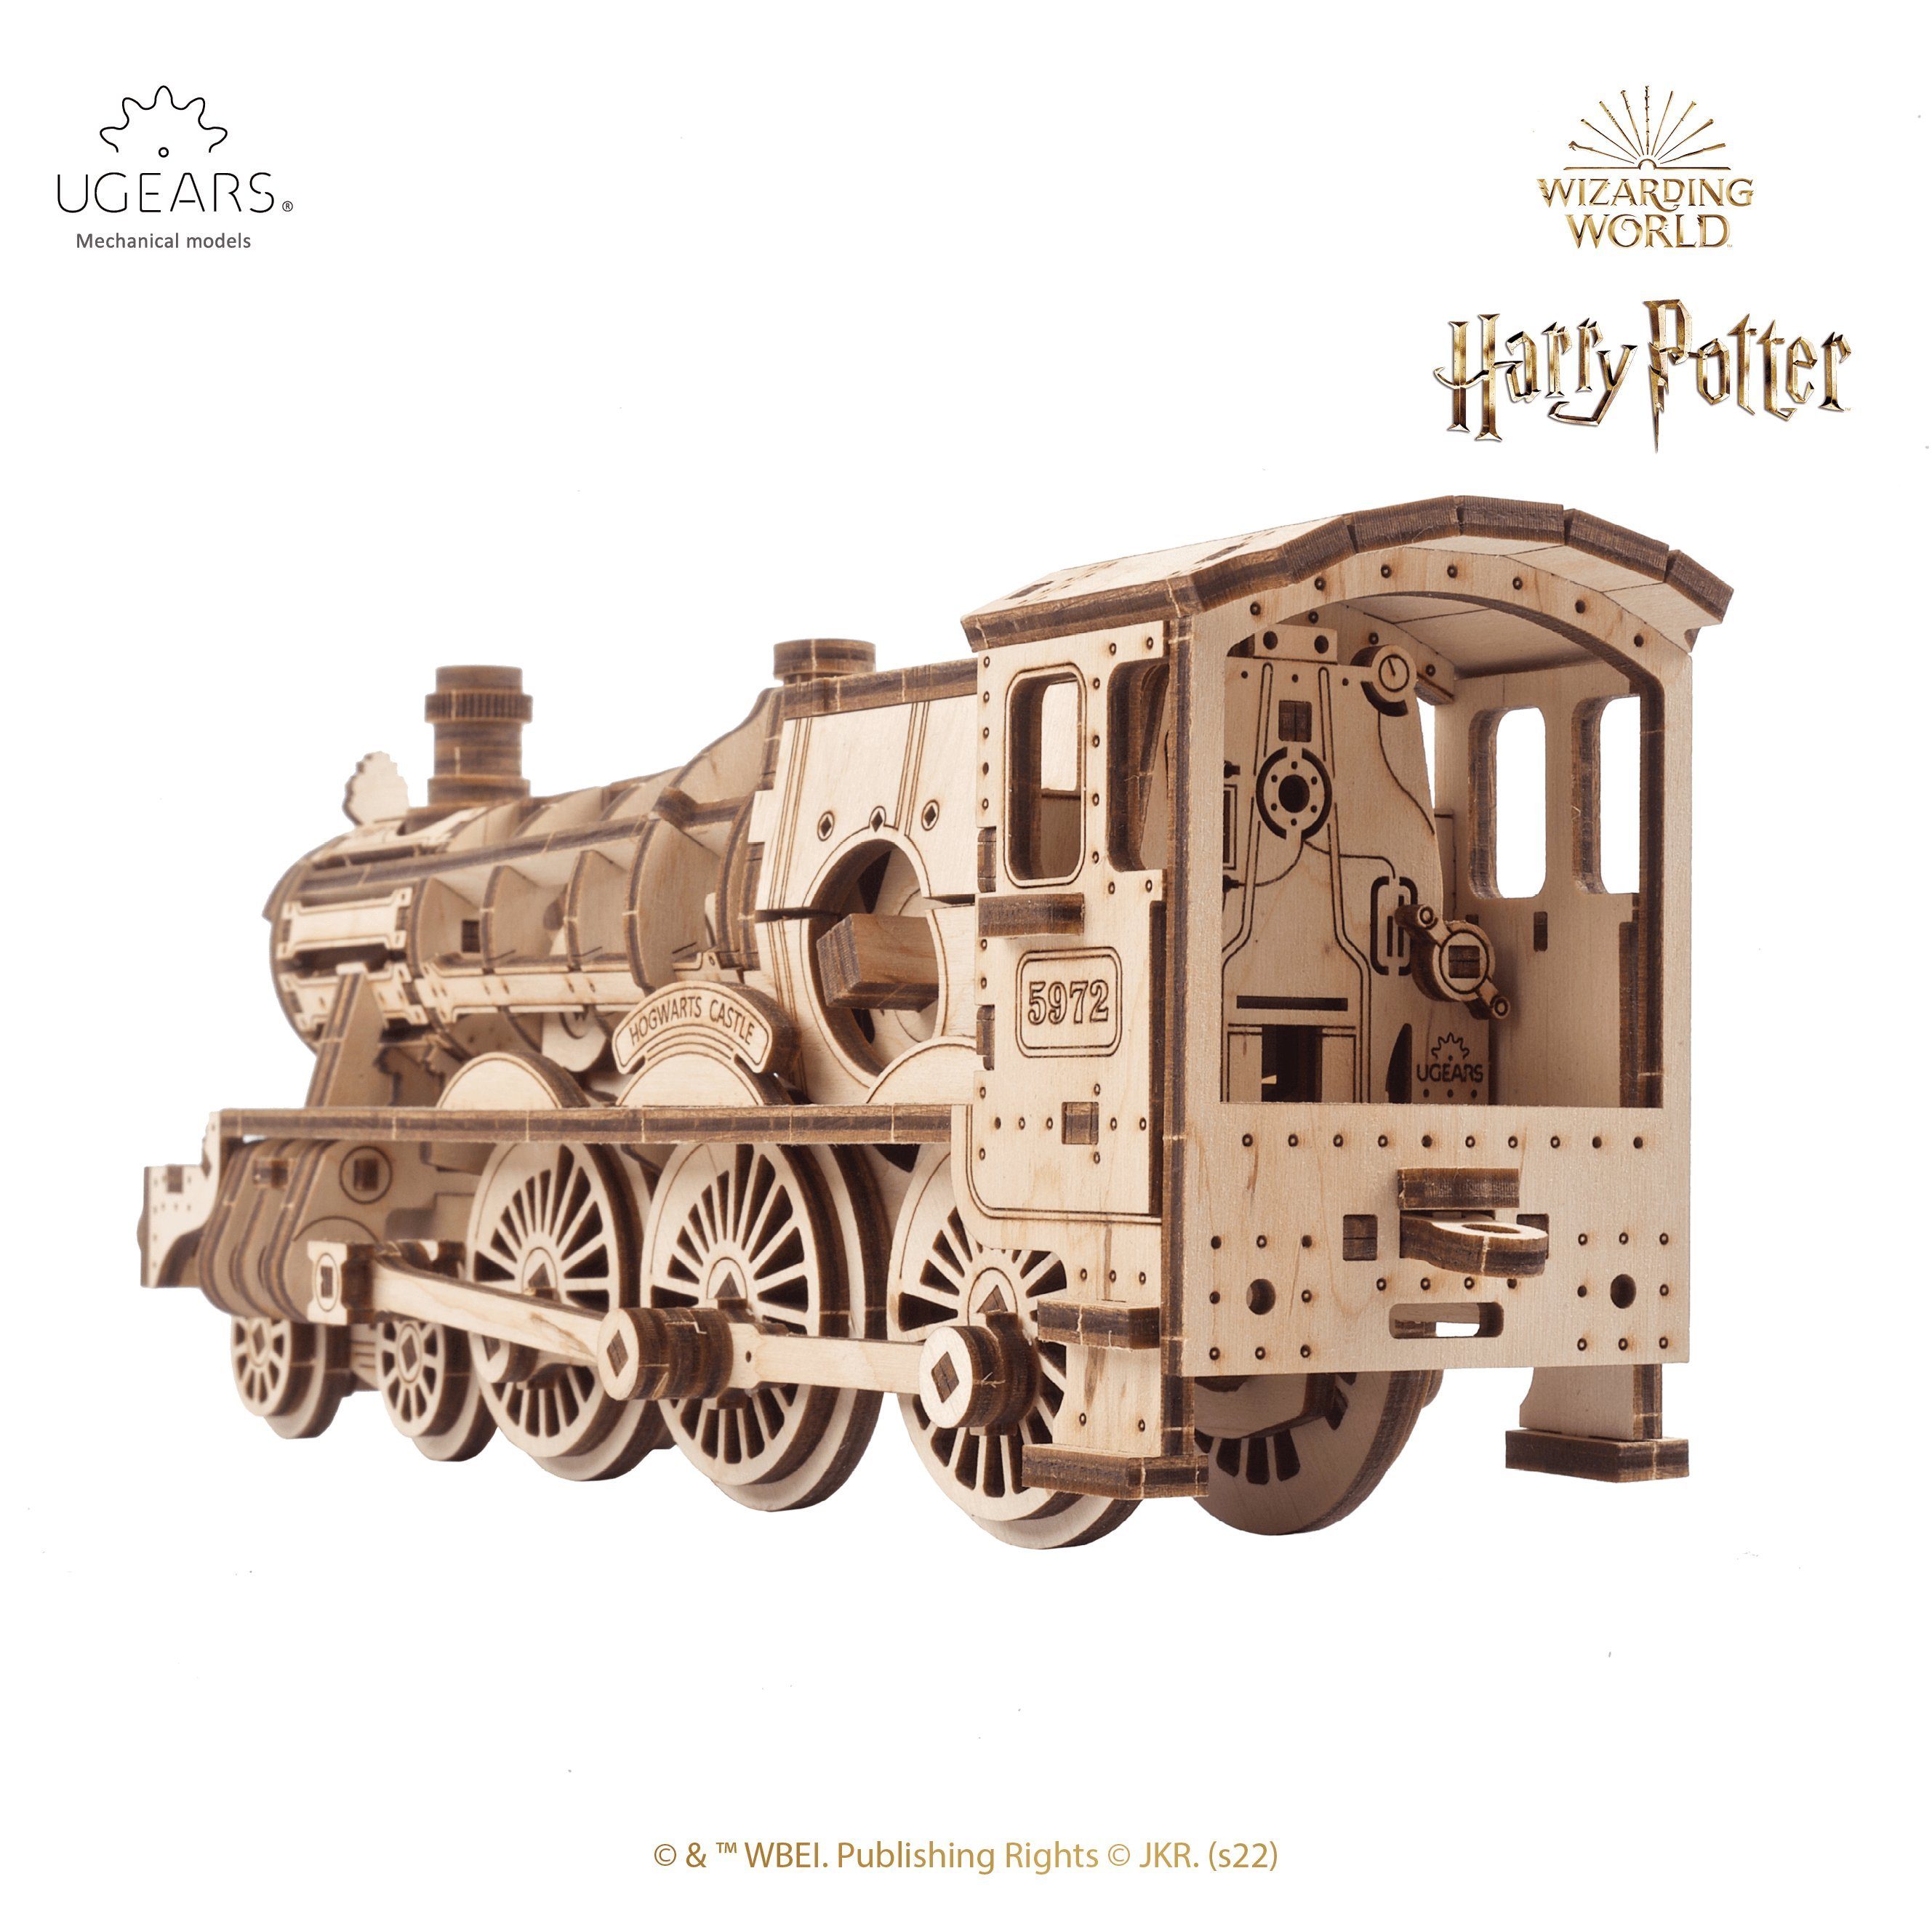 Ugears Hogwarts Puzzle Puzzleteile Harry Express™ Potter Mechanisches UGEARS 504 Holzpuzzle,